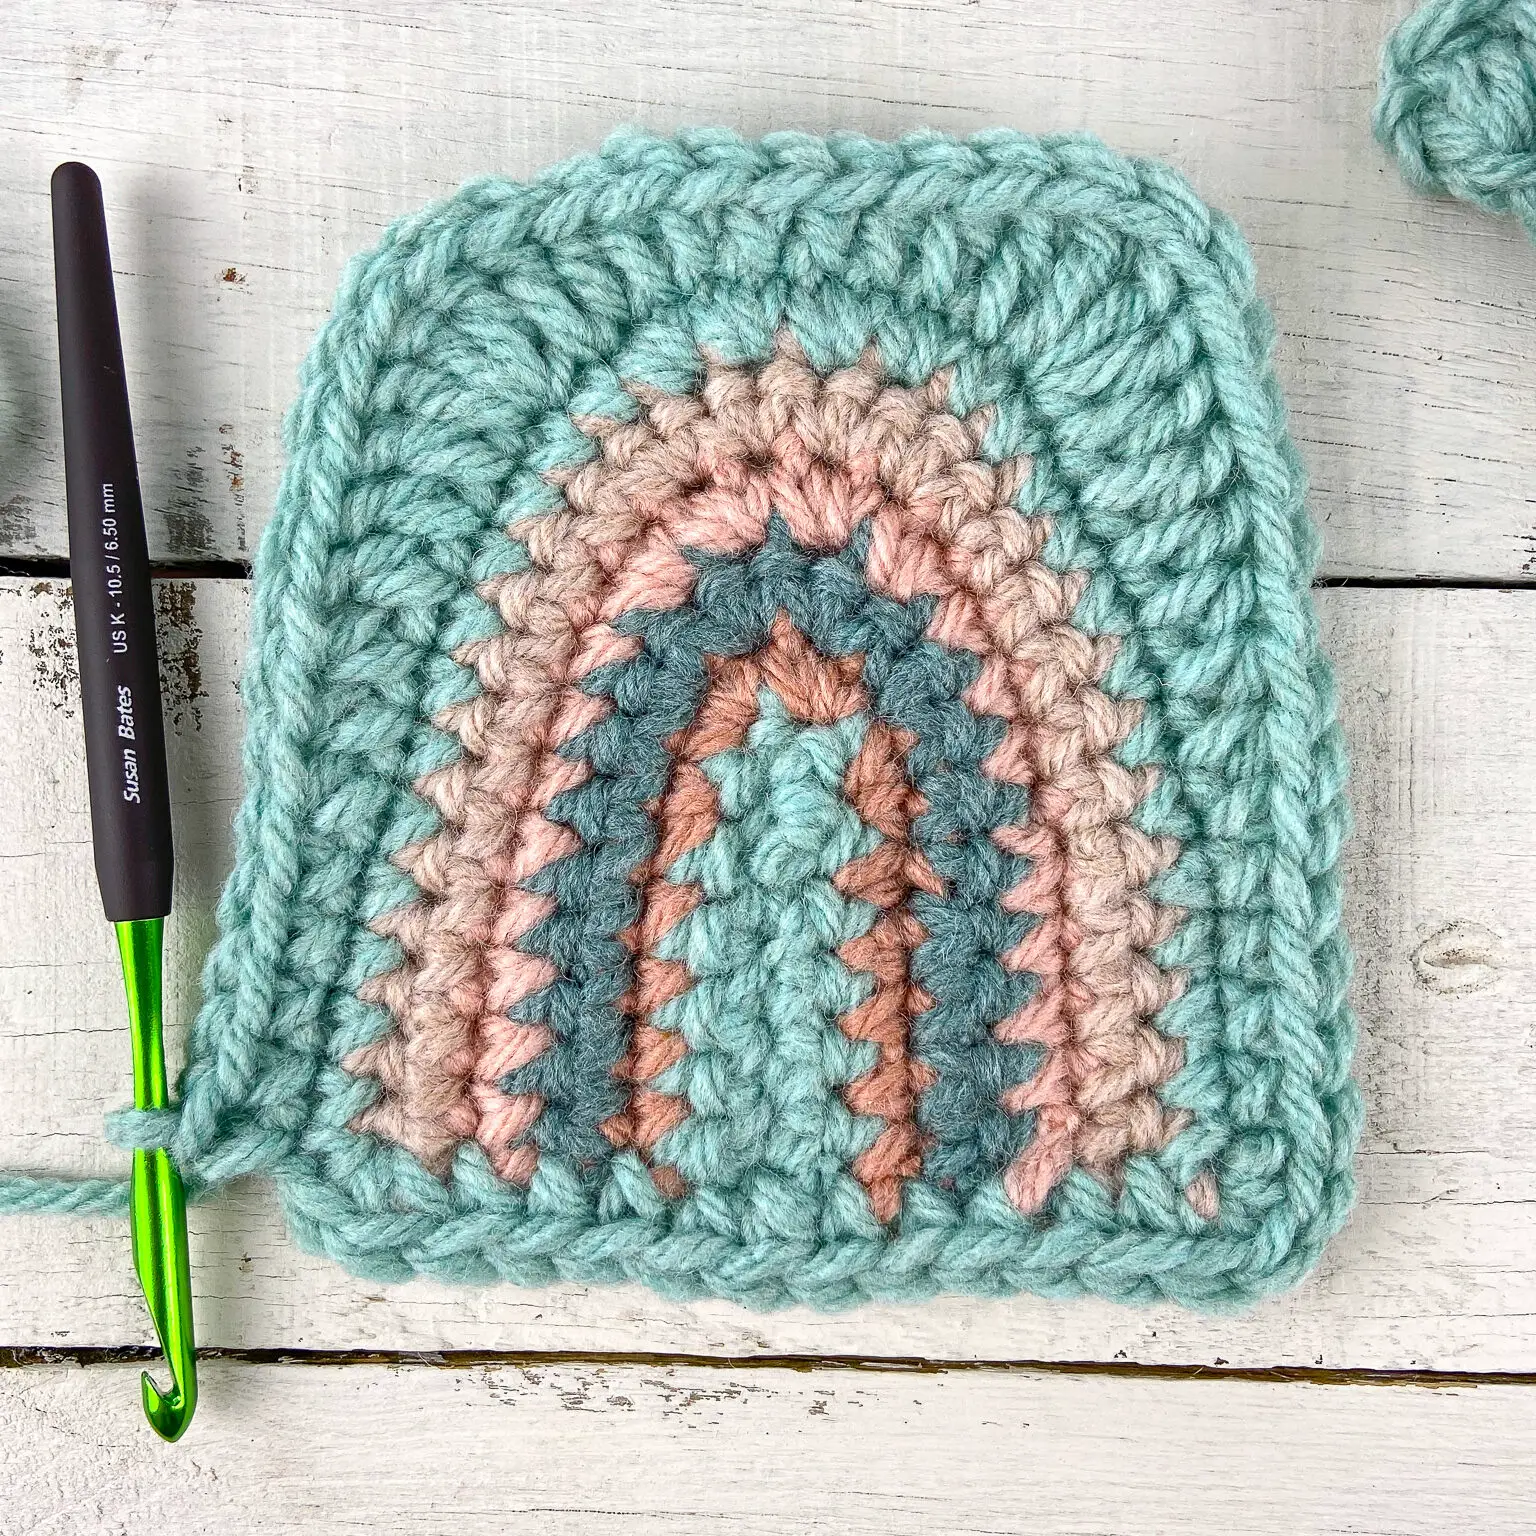 Round 7 of the rainbow squares crochet baby blanket